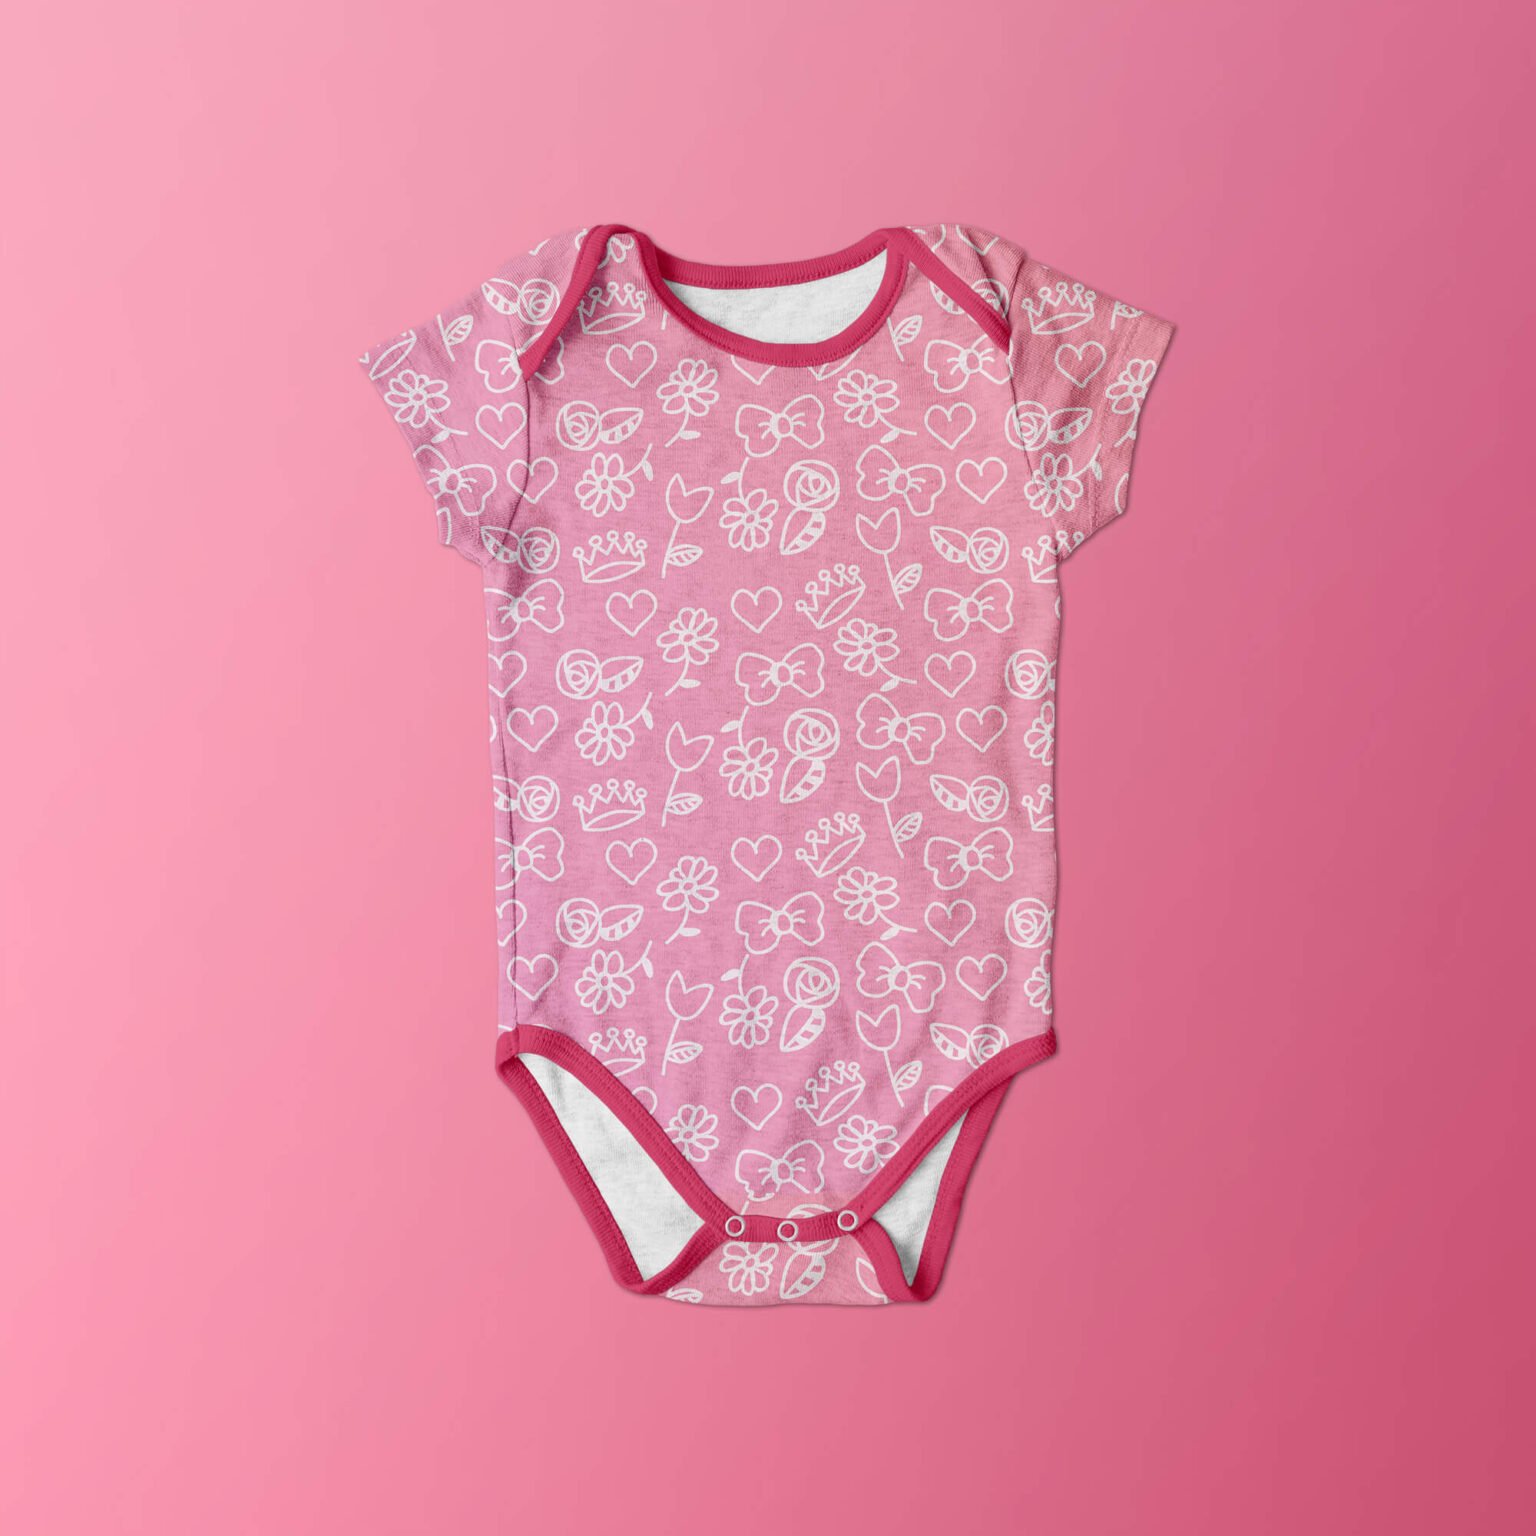 Free Baby Clothes Mockup PSD Template - Mockup Den